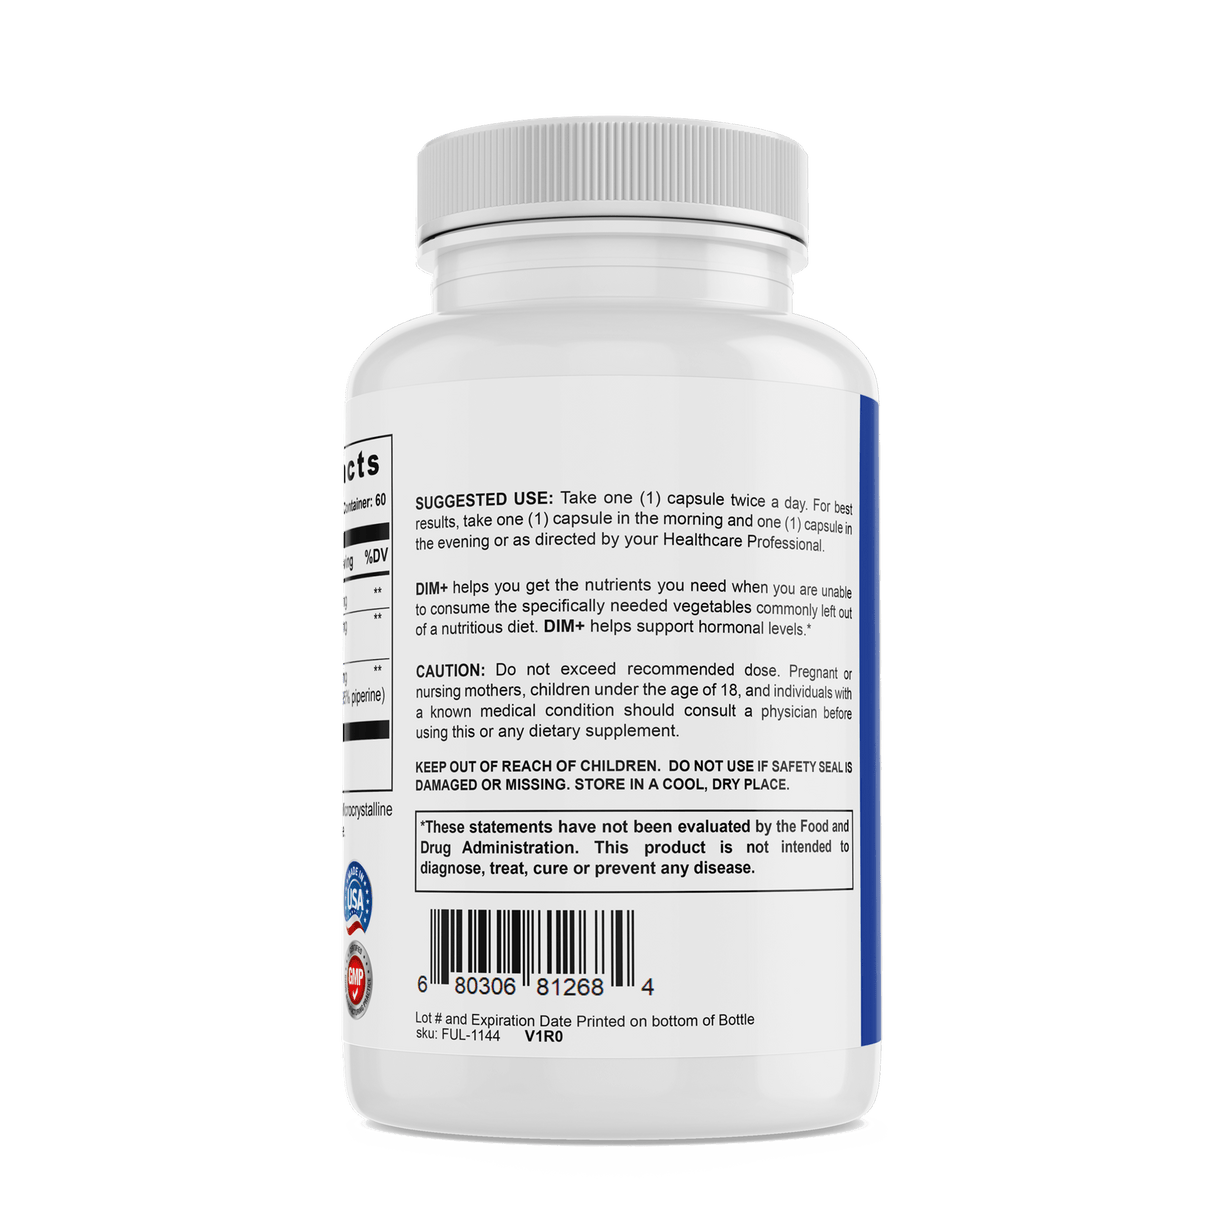 DIM+ Hormone Support | Complete Body Labs | Probiotics, Nootropics, Brain Supplements, Protein Bars, Workout Supplements, Health Supplements, Omega-3 & Essential Vitamins For Men & Women